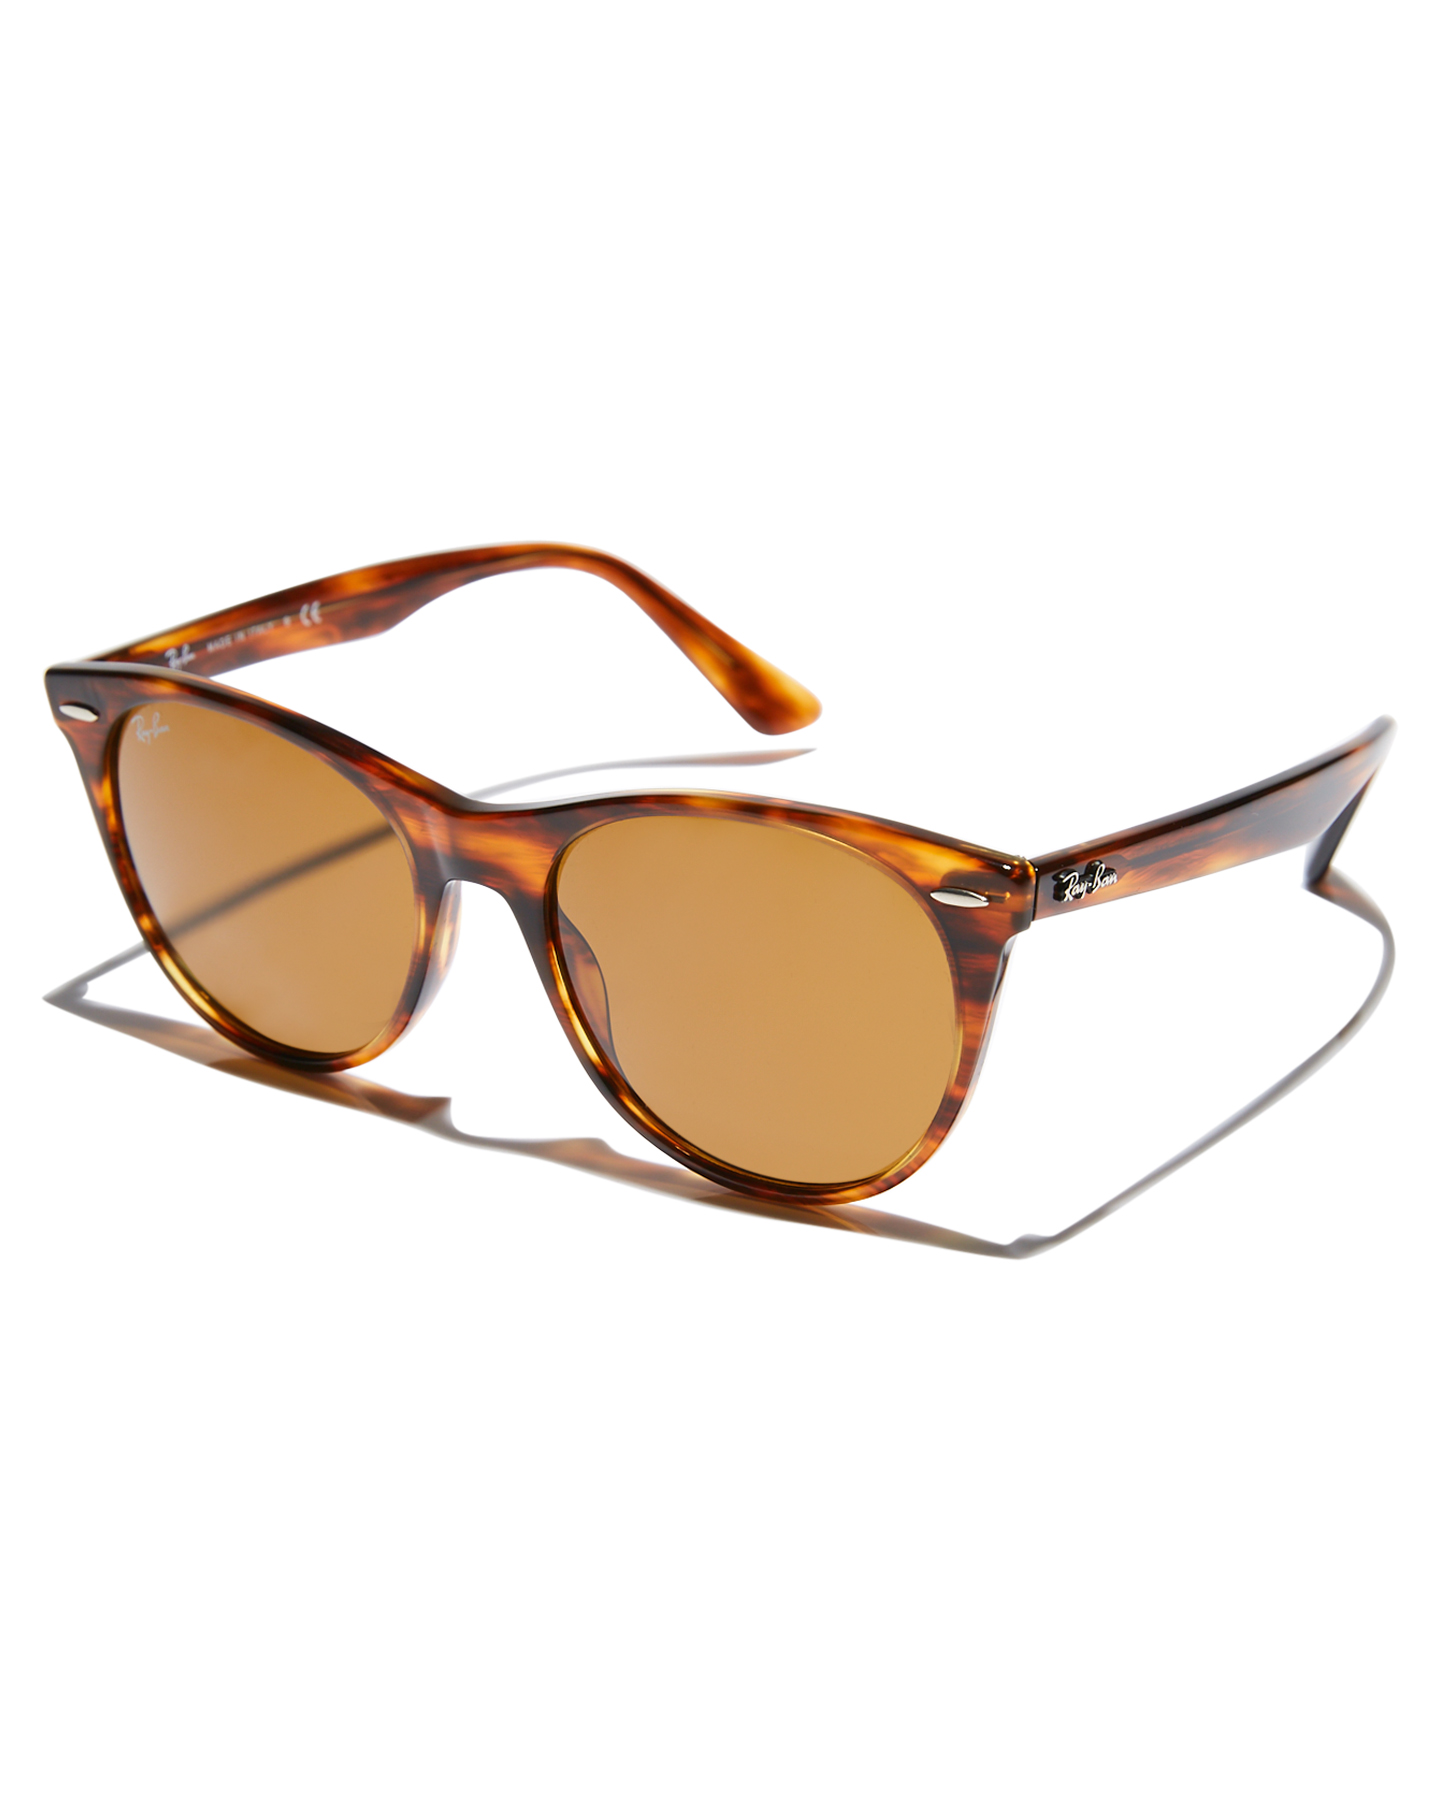 ray ban sunglasses sale $19.99 wayfarer